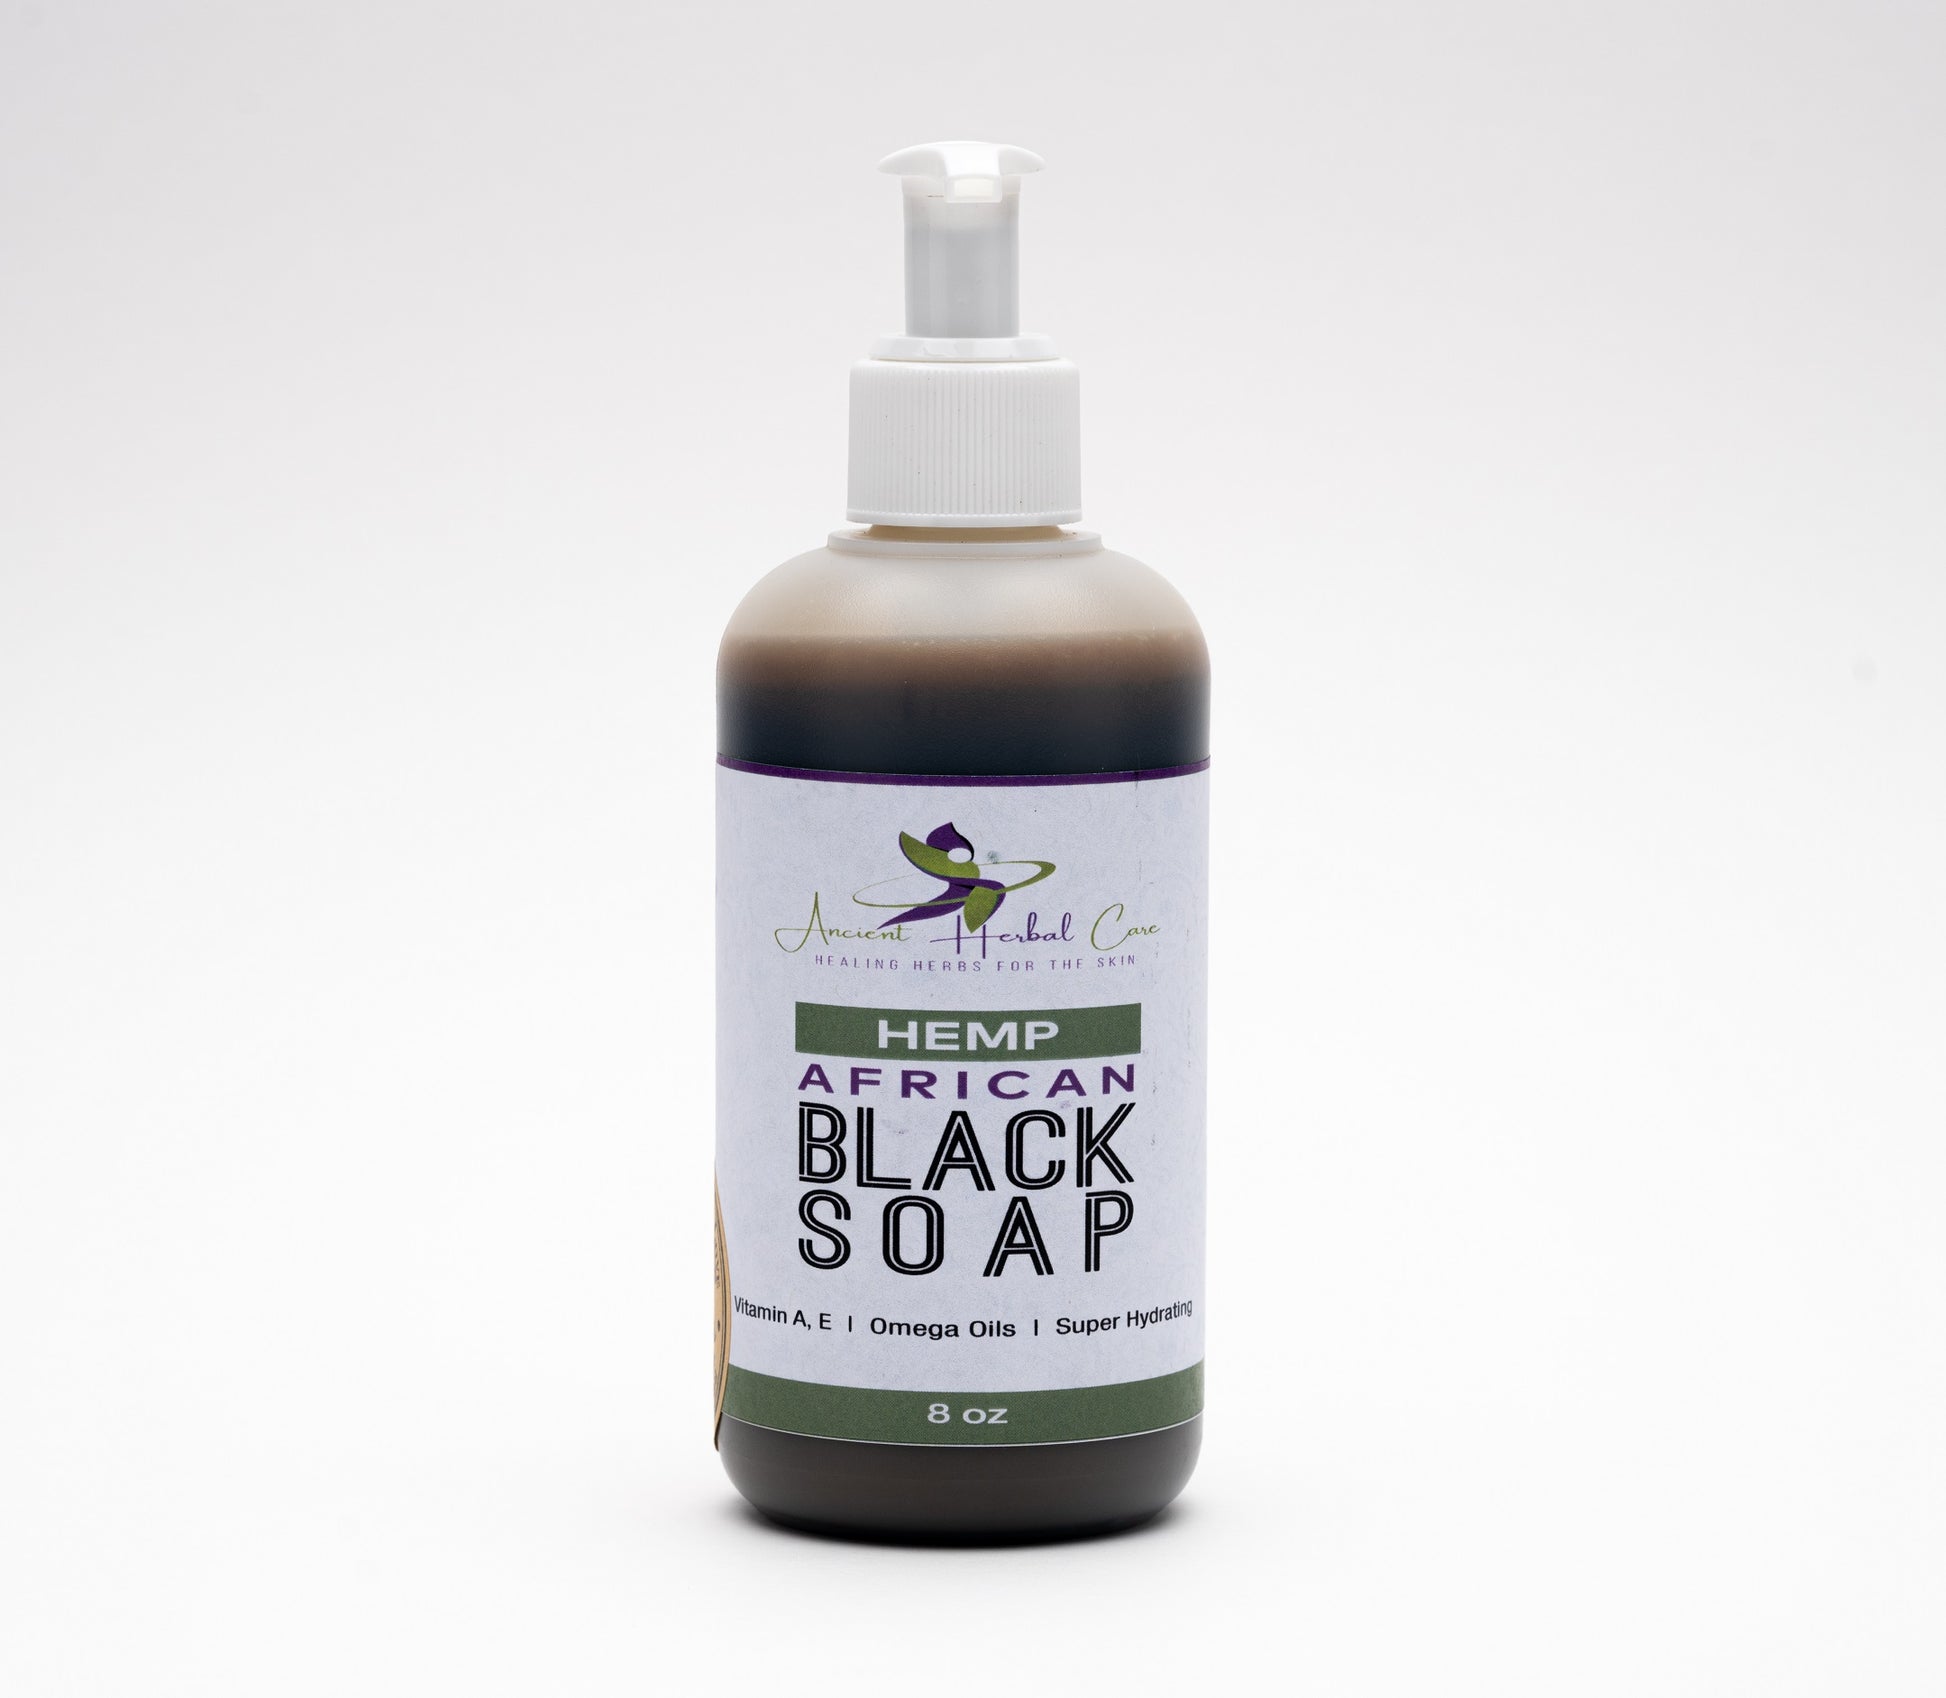 Hemp African Black Soap - Ancient Herbal Care